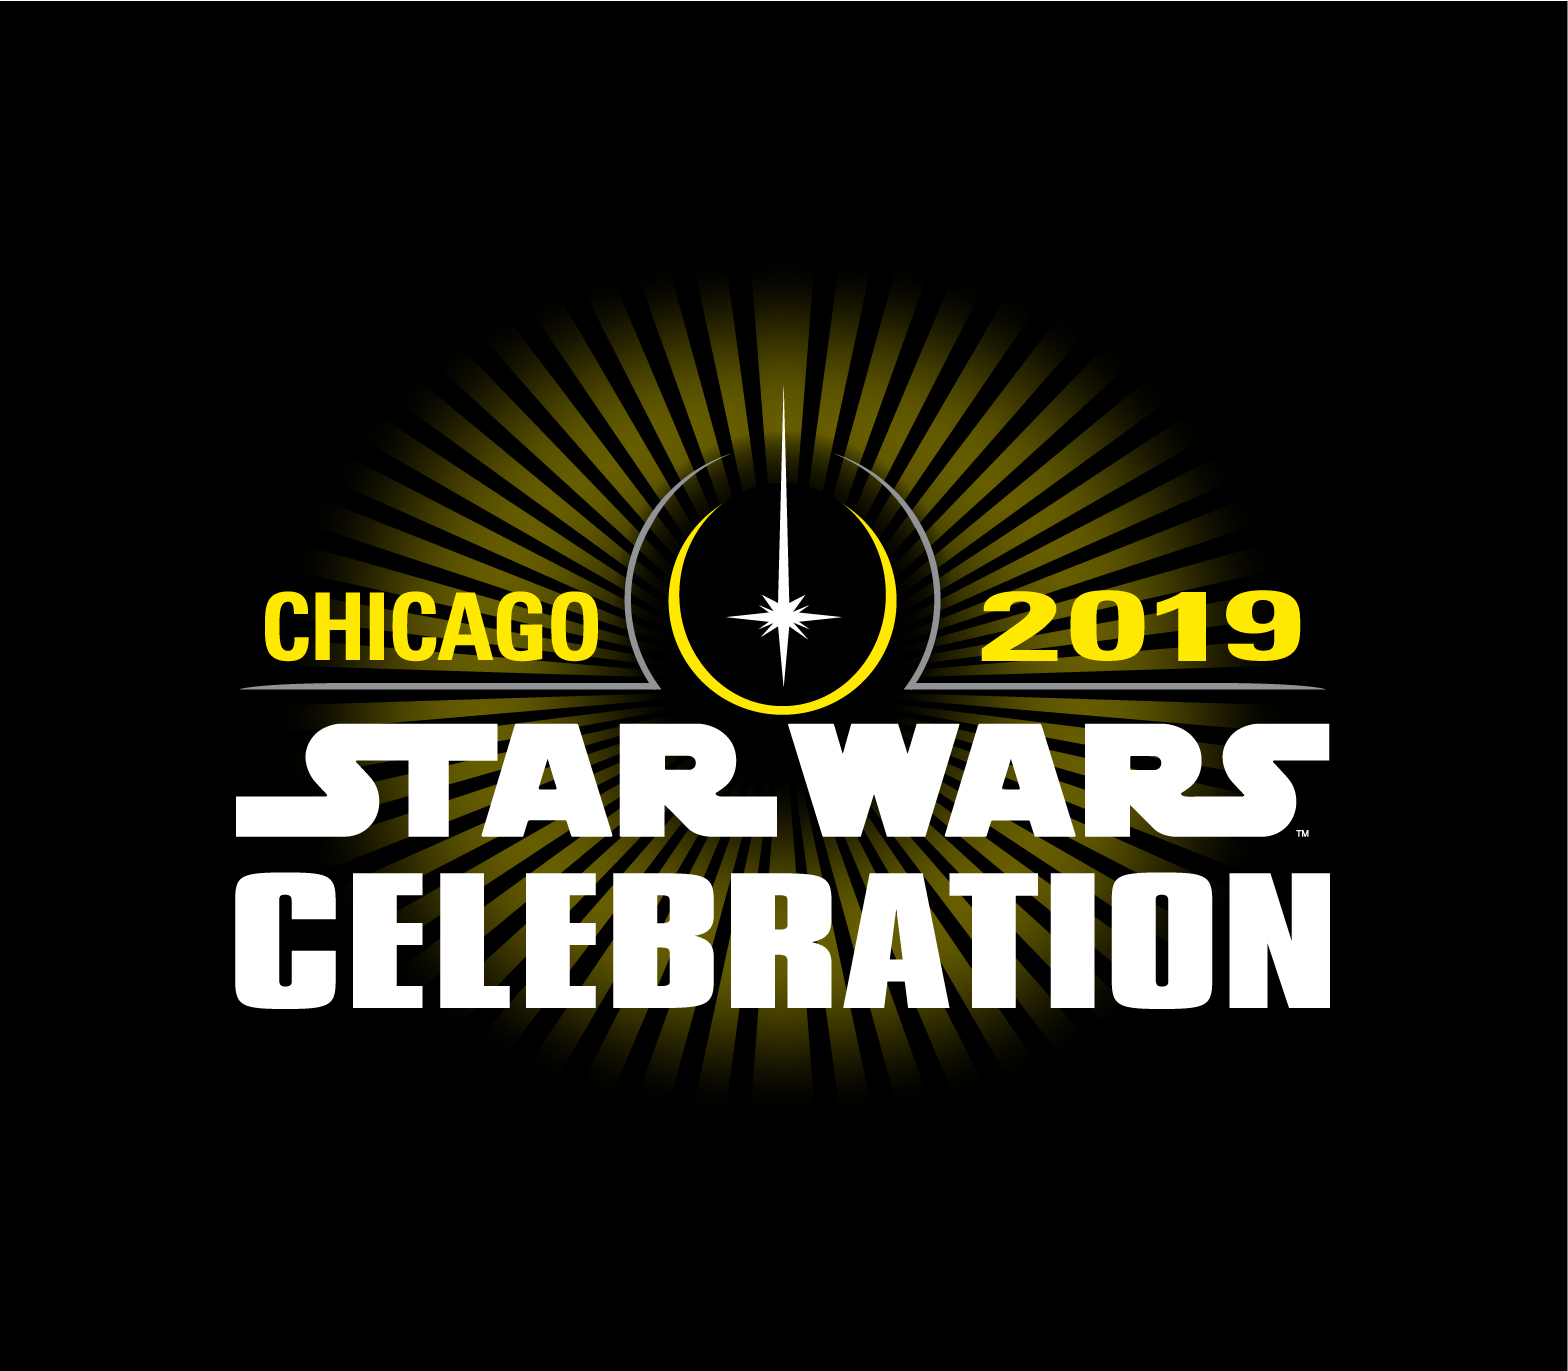 STAR WARS CELEBRATION CHICAGO 2019